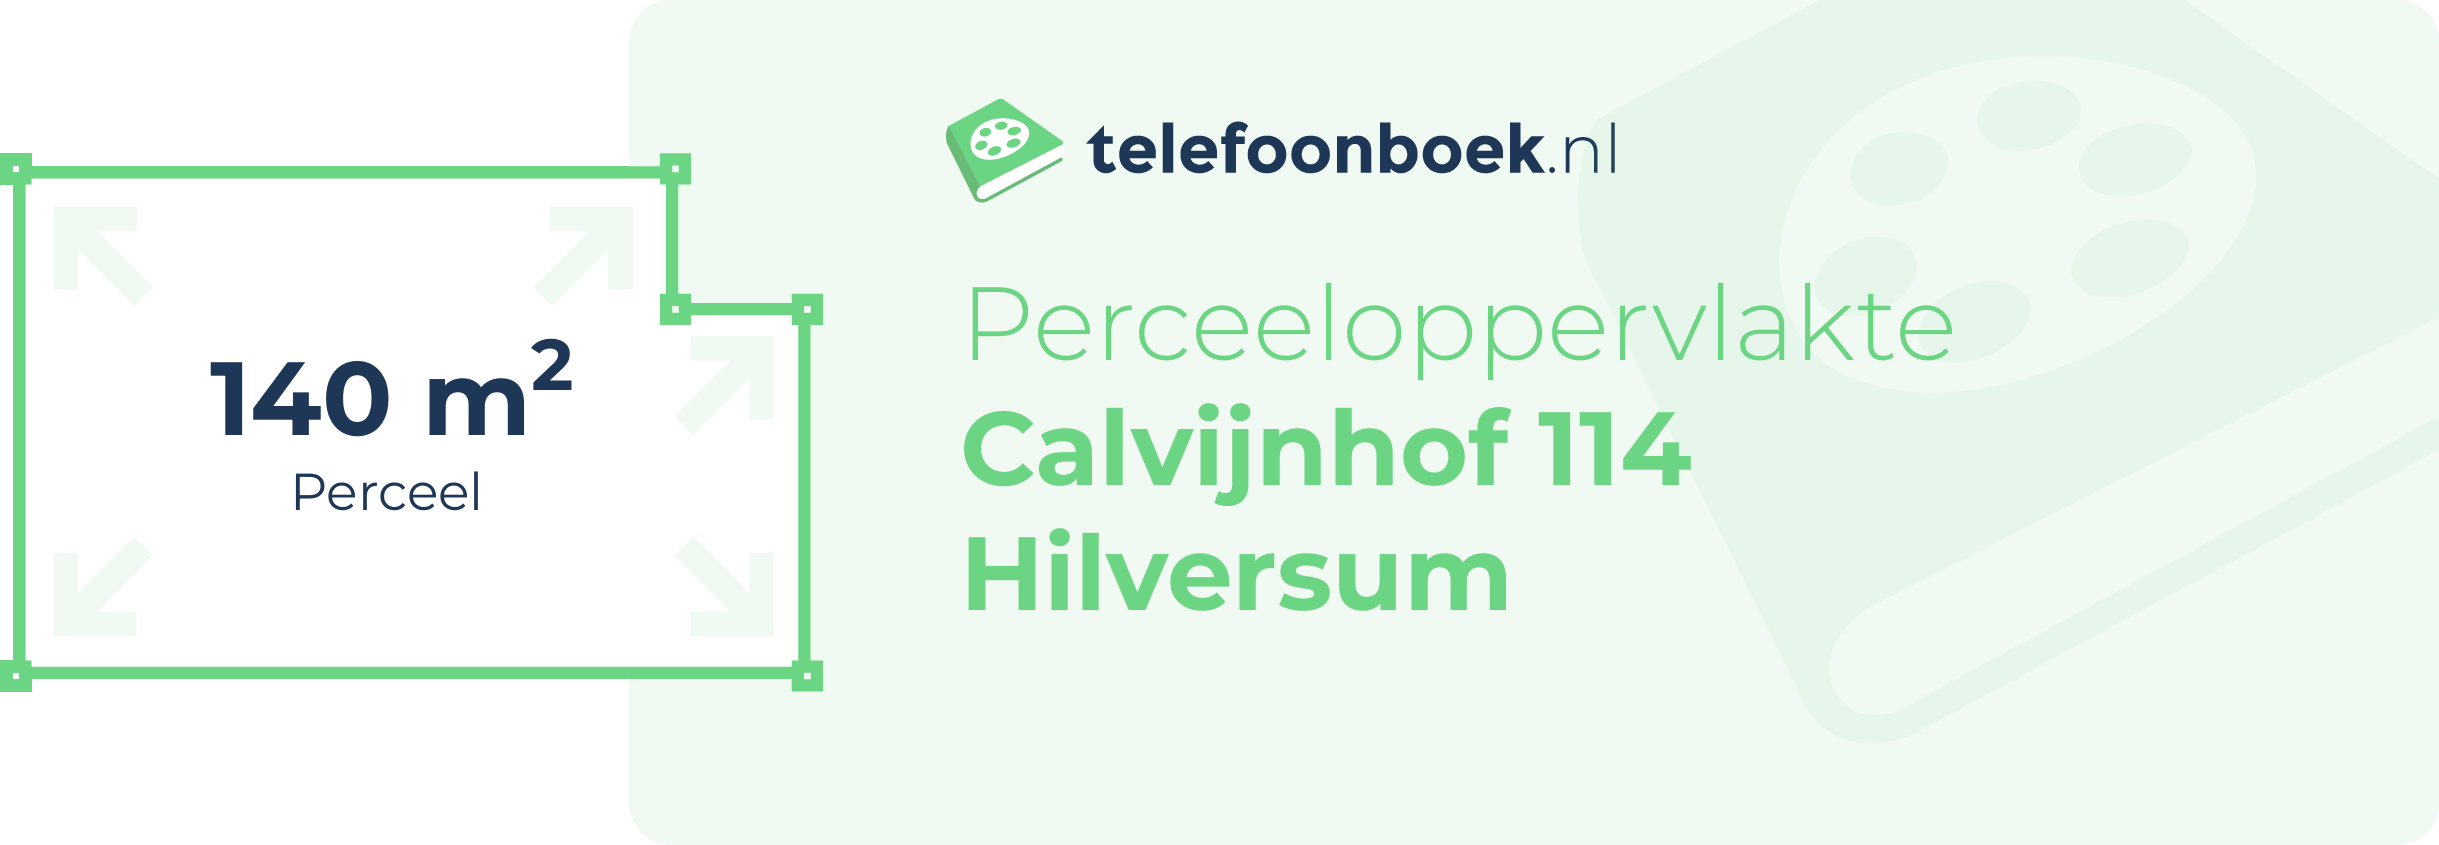 Perceeloppervlakte Calvijnhof 114 Hilversum